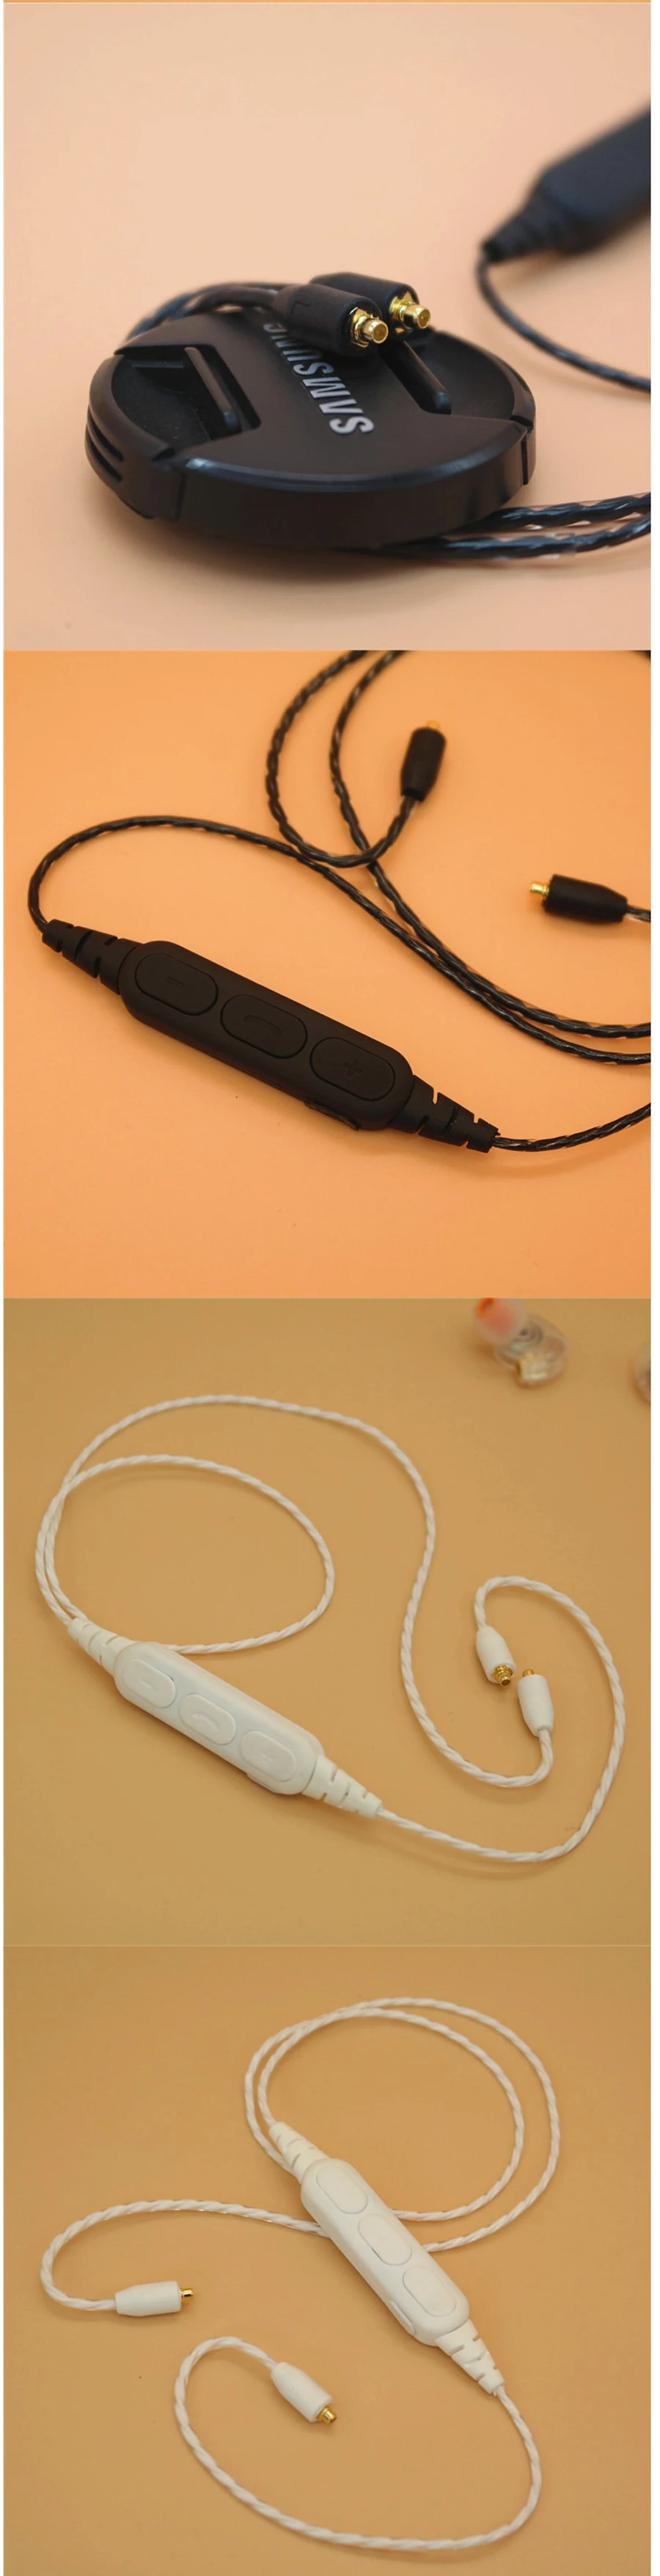 MMCX Bluetooth наушники адаптер кабель Bluetooth для Shure SE215 SE315 SE535 SE846 UE900 наушники беспроводные кабели с micphone